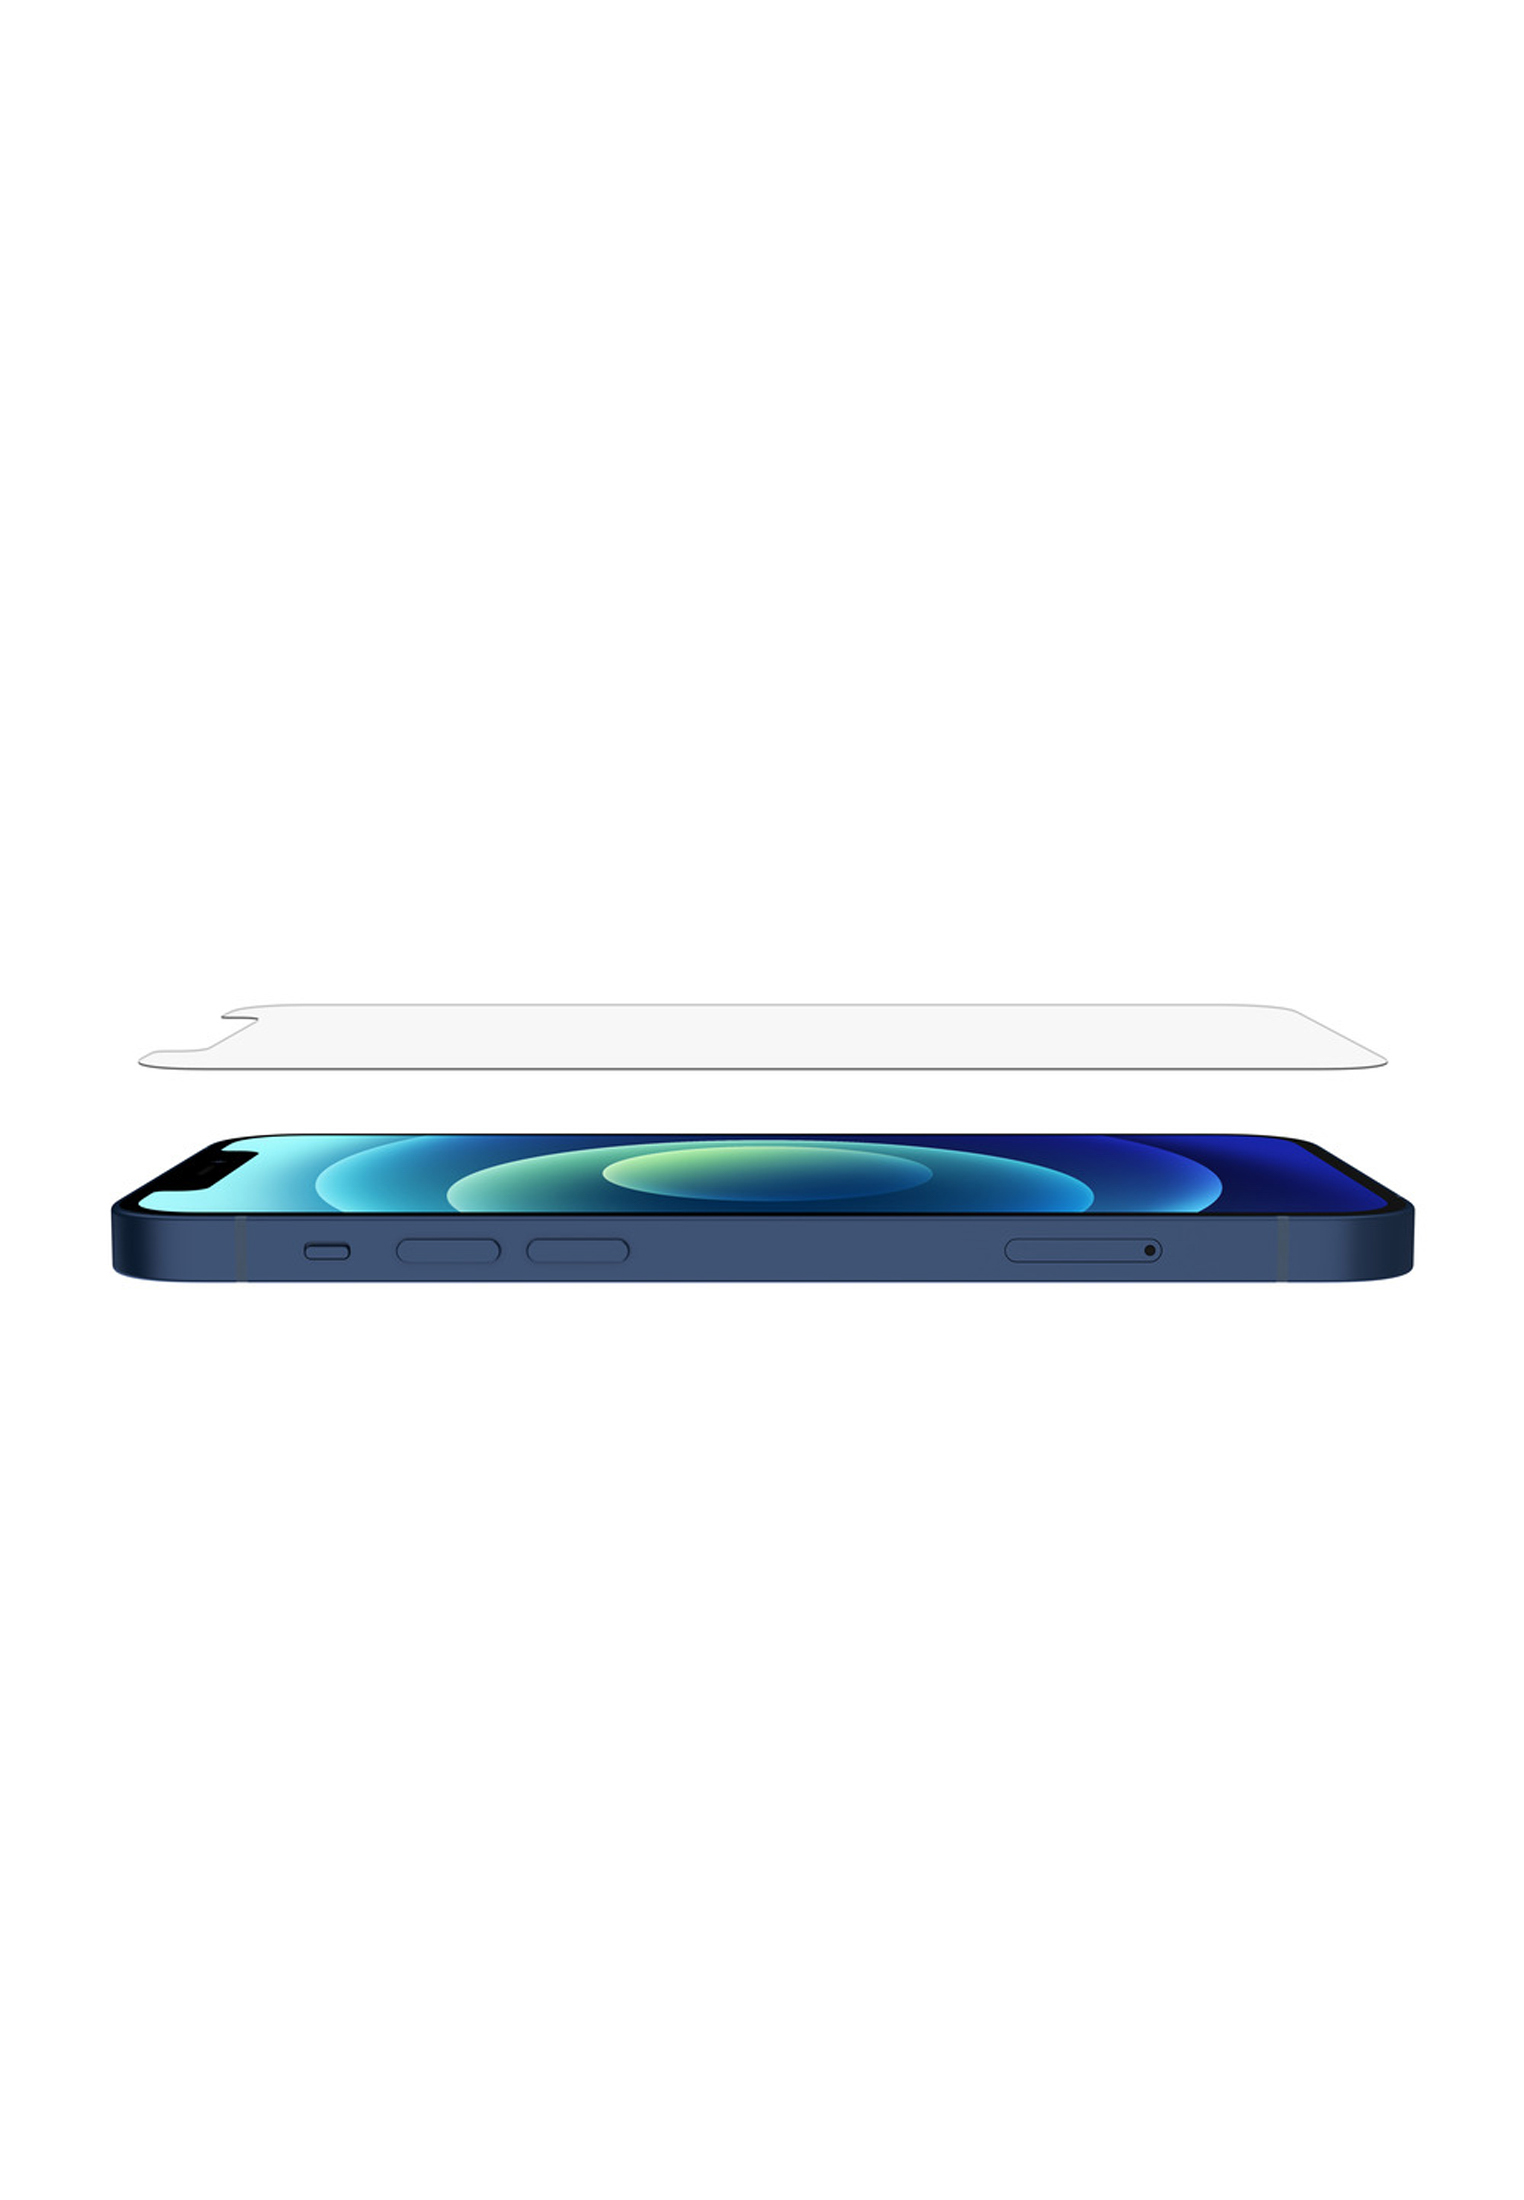 BELKIN SCREENFORCE™ UltraGlass Apple Antimikrobieller iPhone Displayschutz(für 12)